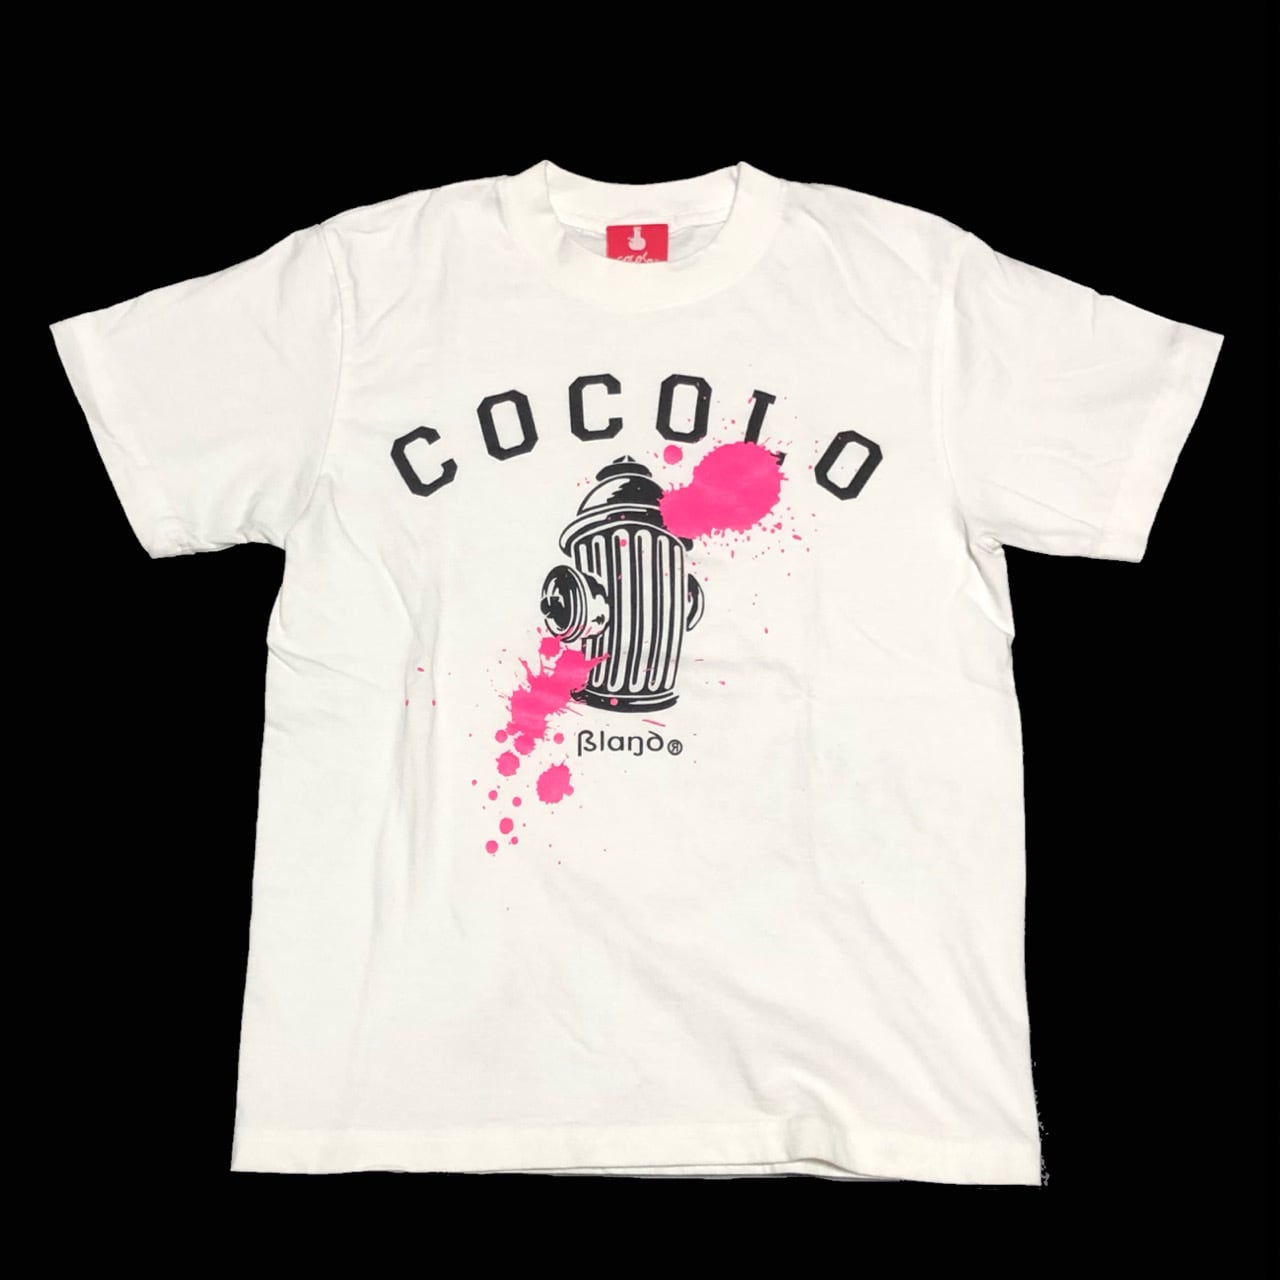 size S】COCOLO BLAND ココロブランド Tシャツ ストリート 古着